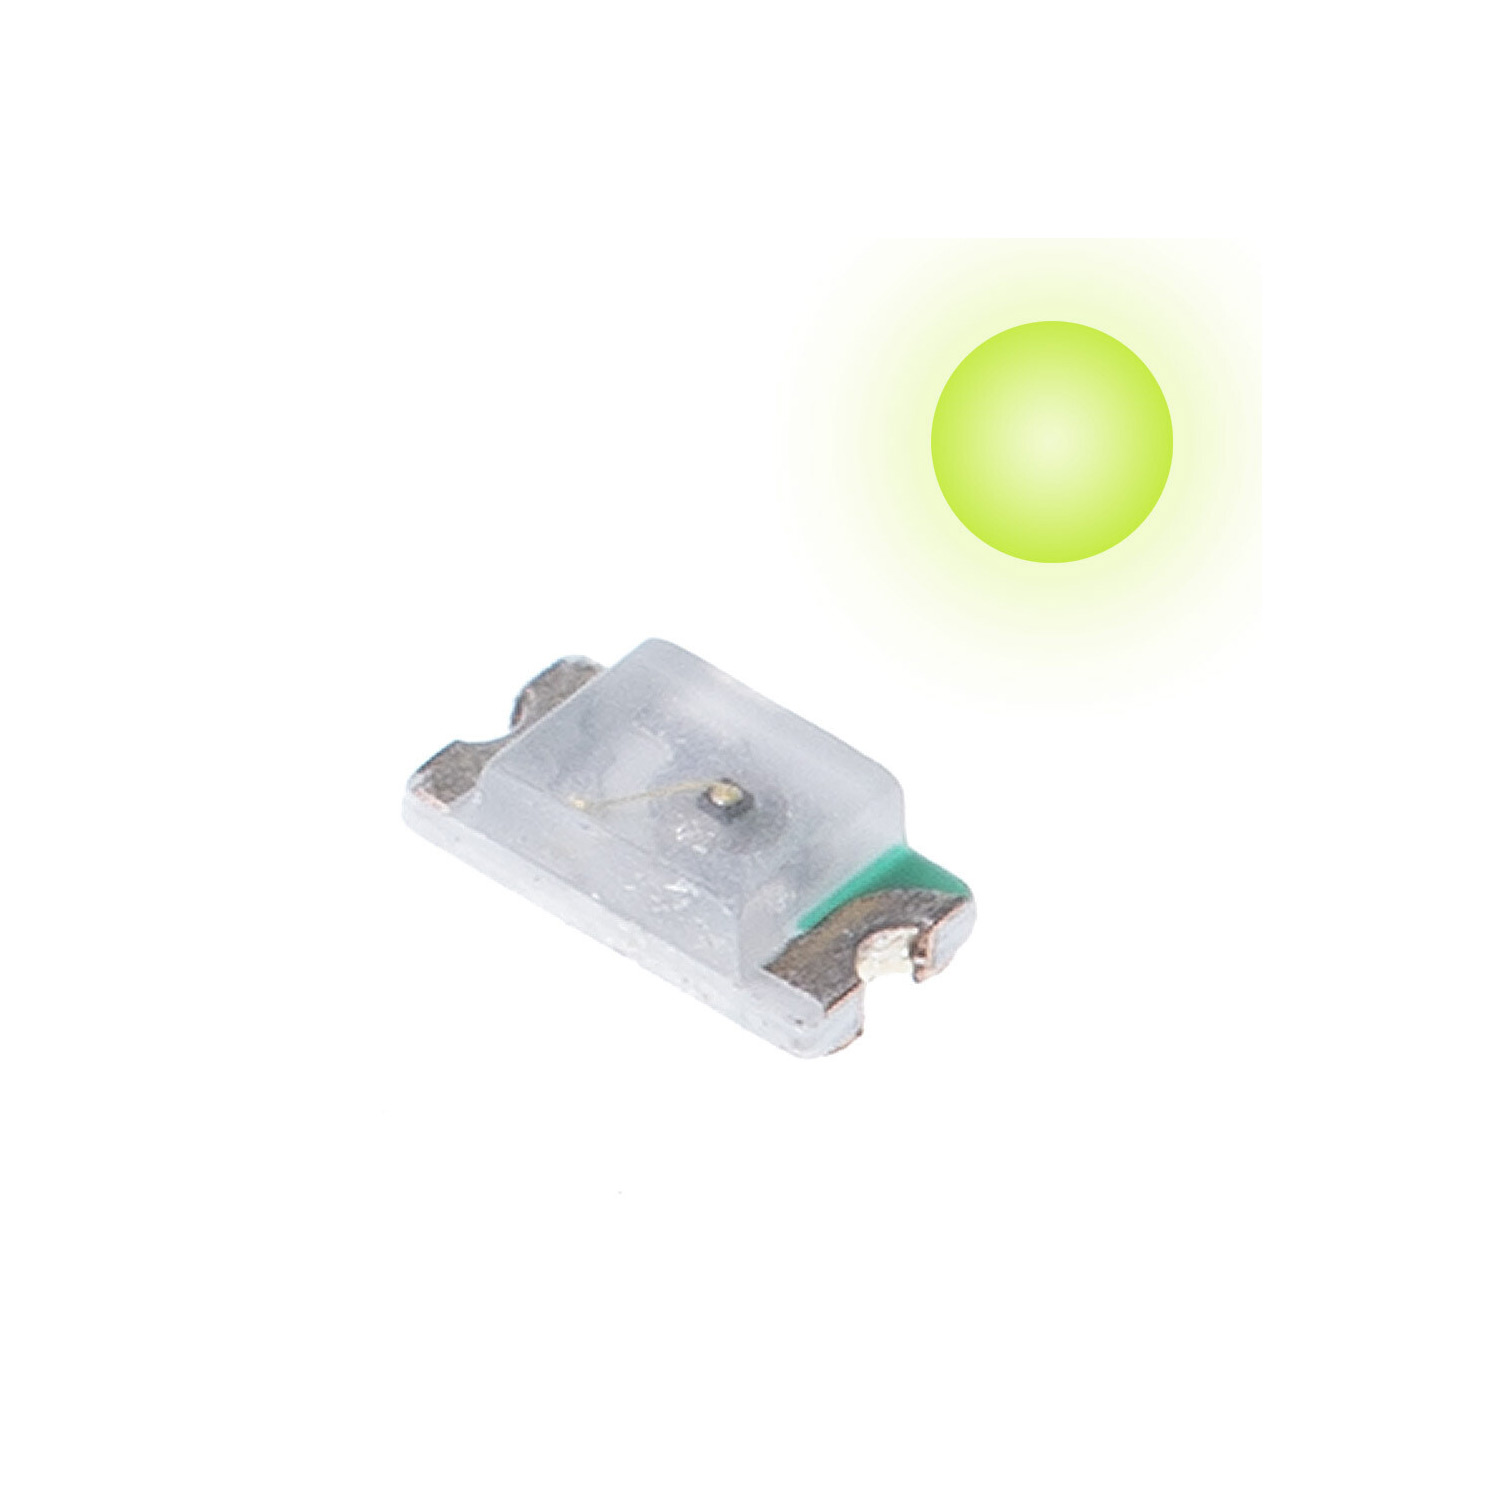 2 x SMD LED (Lime)